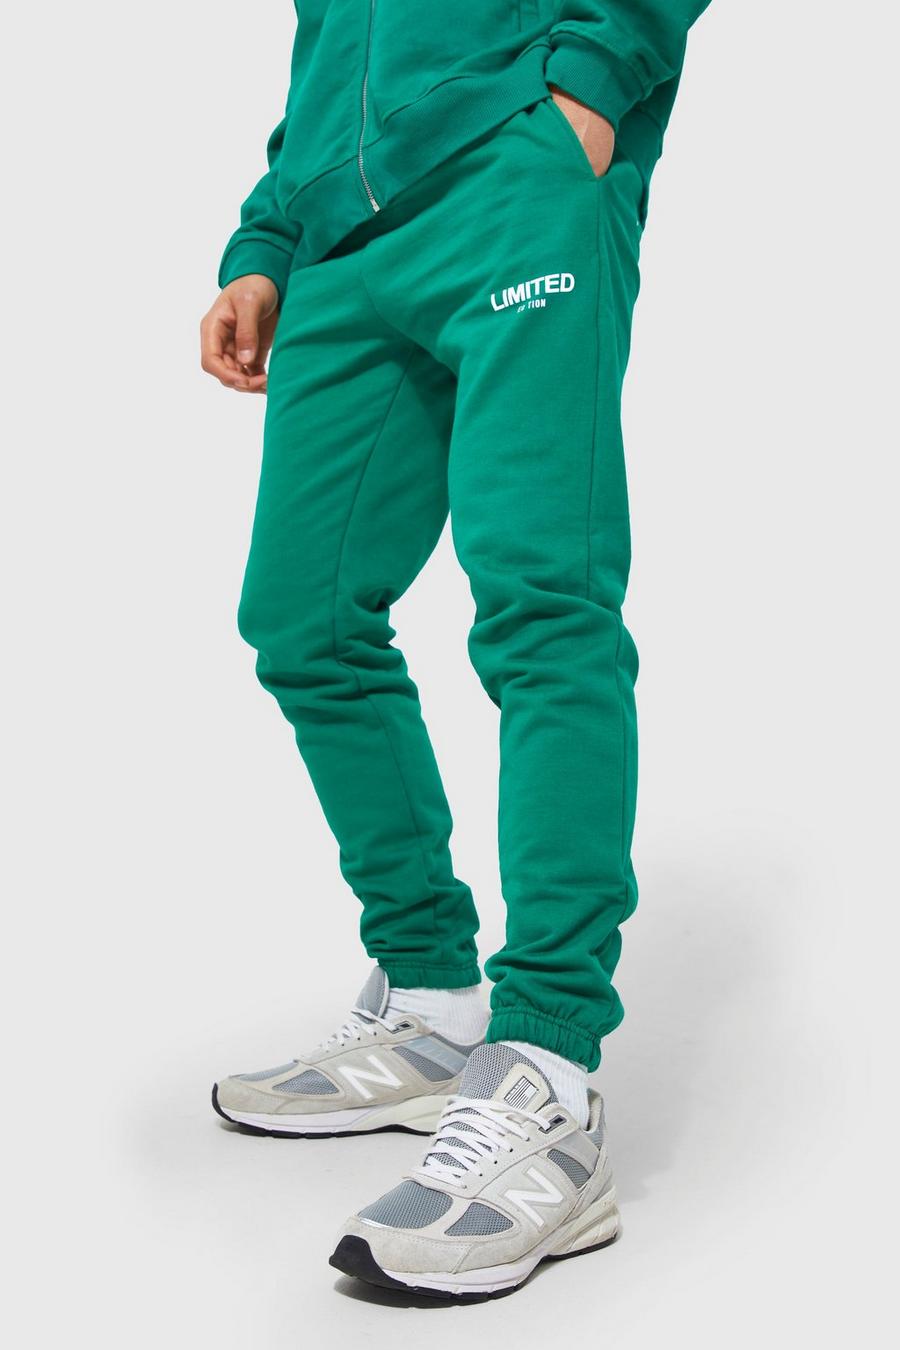 Pantalón deportivo Regular reciclado grueso Limited, Green verde image number 1